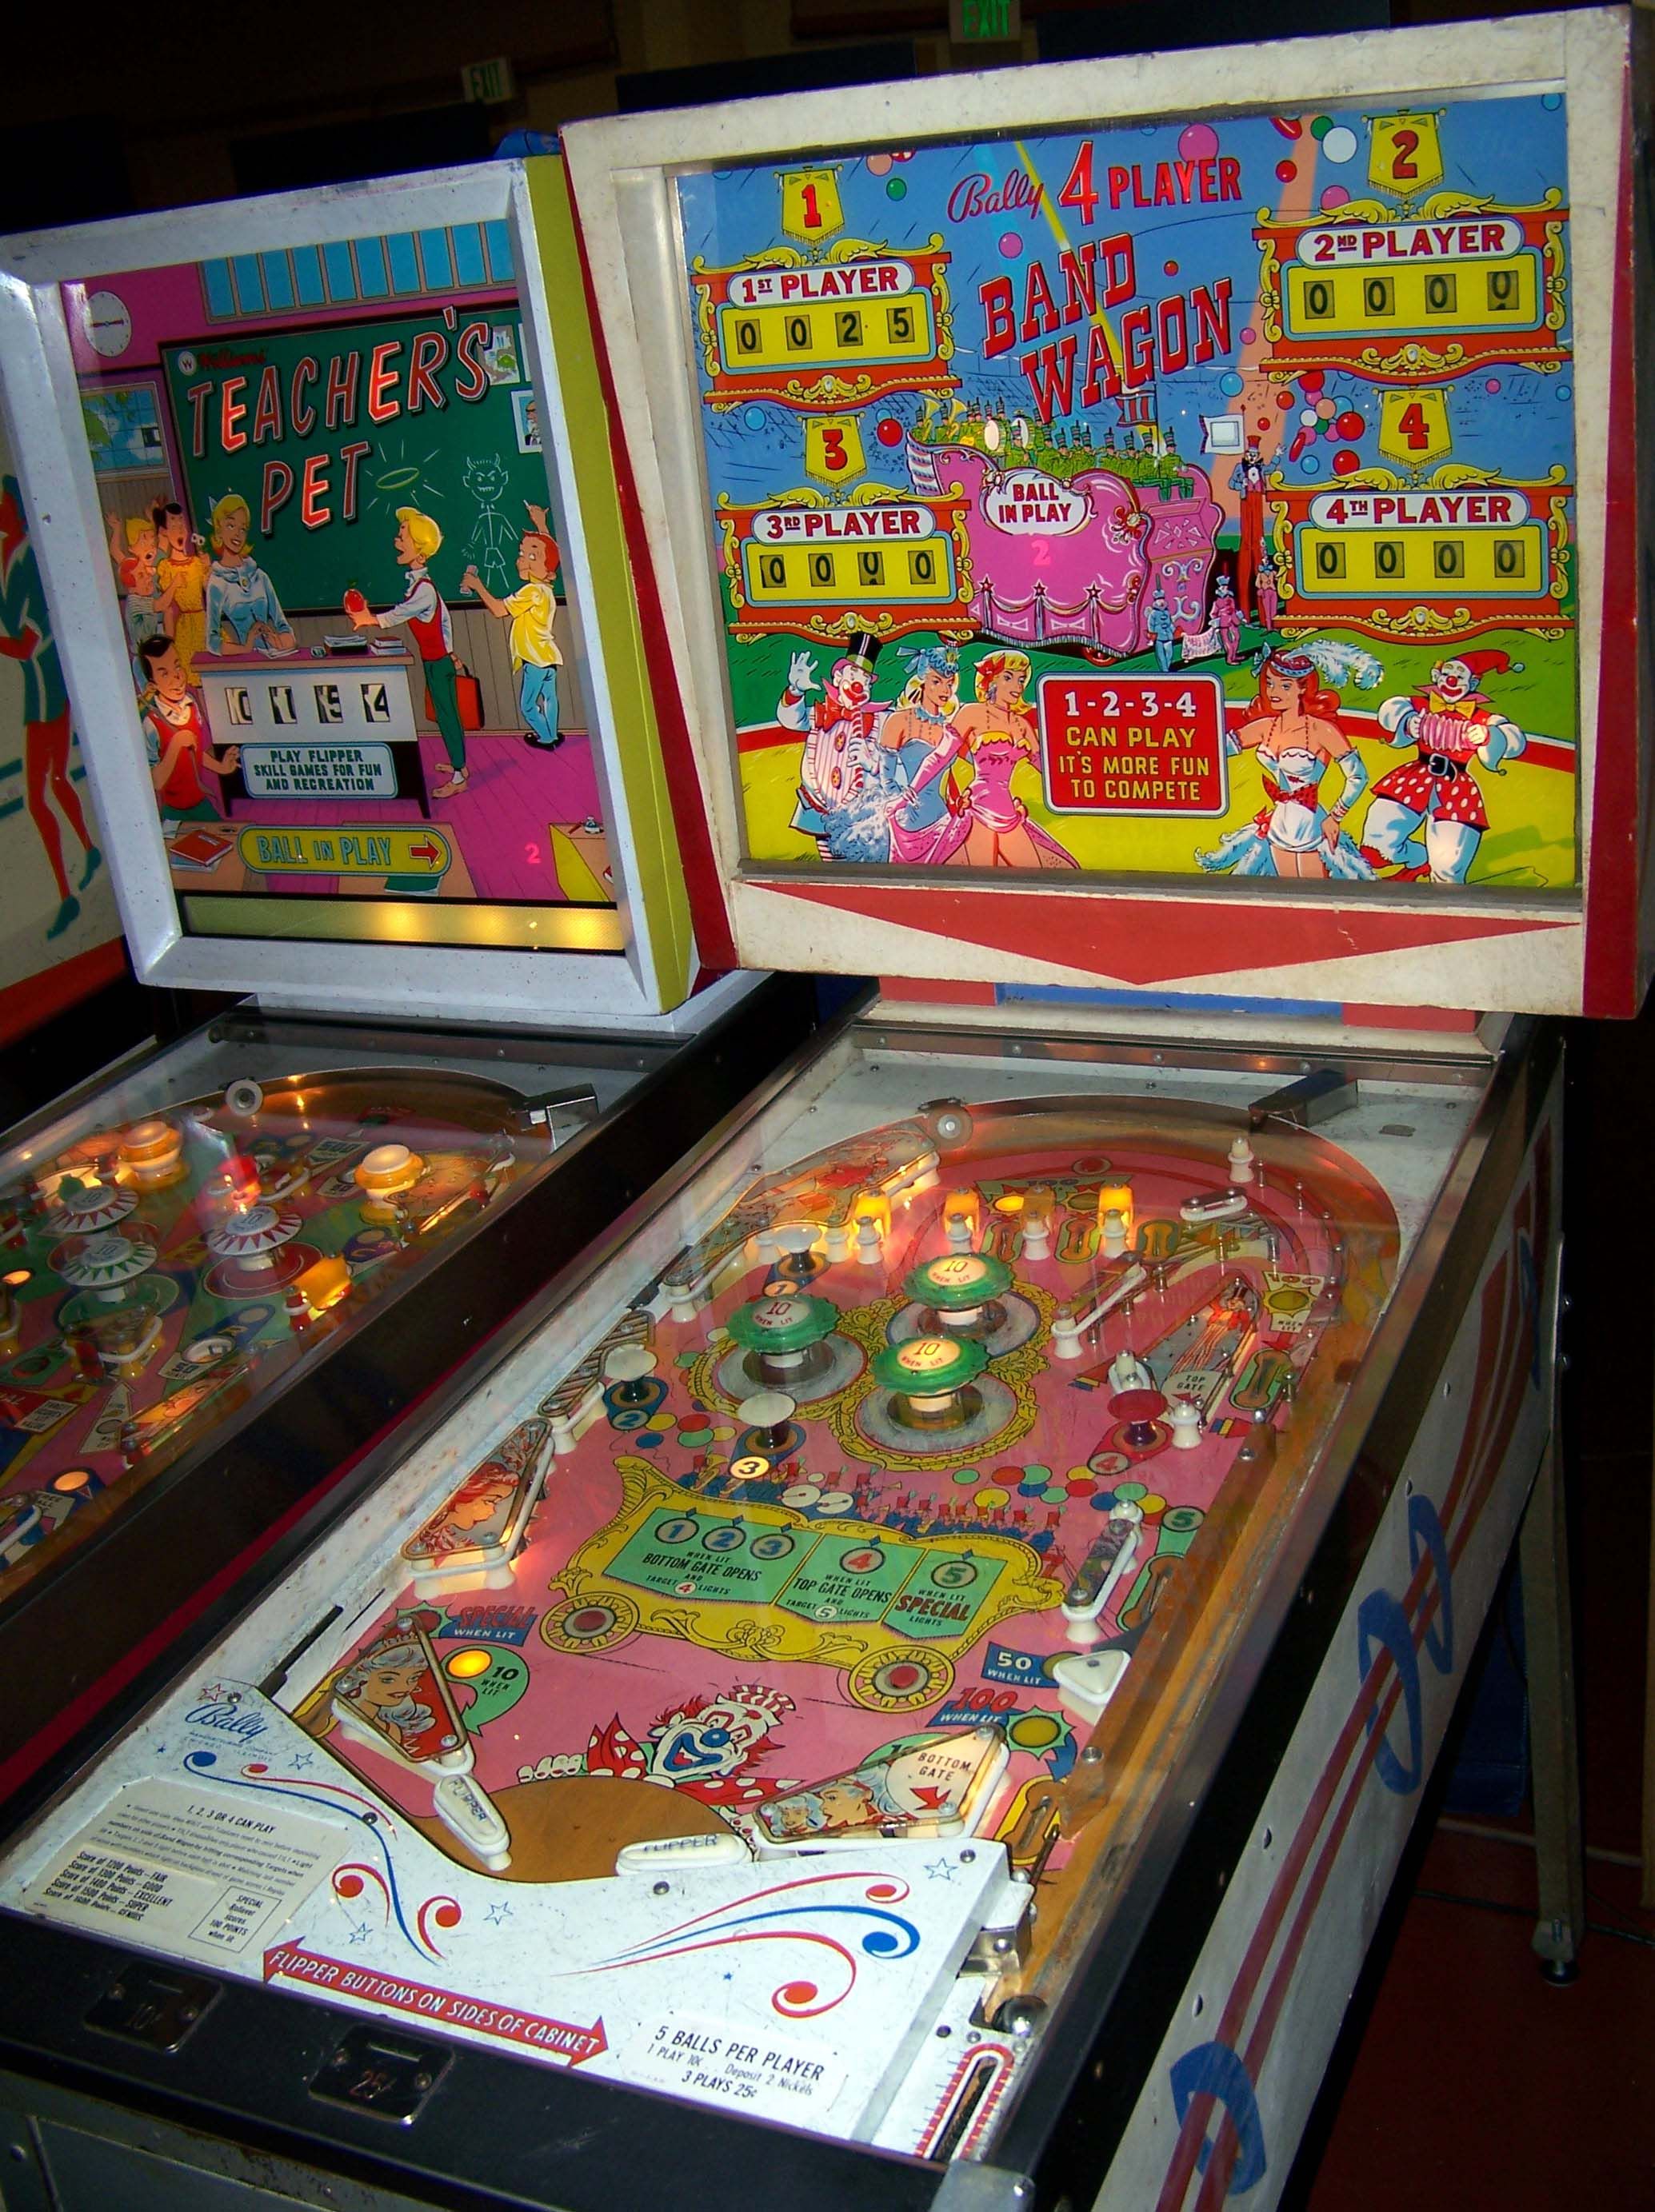 Juegos de Thunderkick bally slot machines 566599